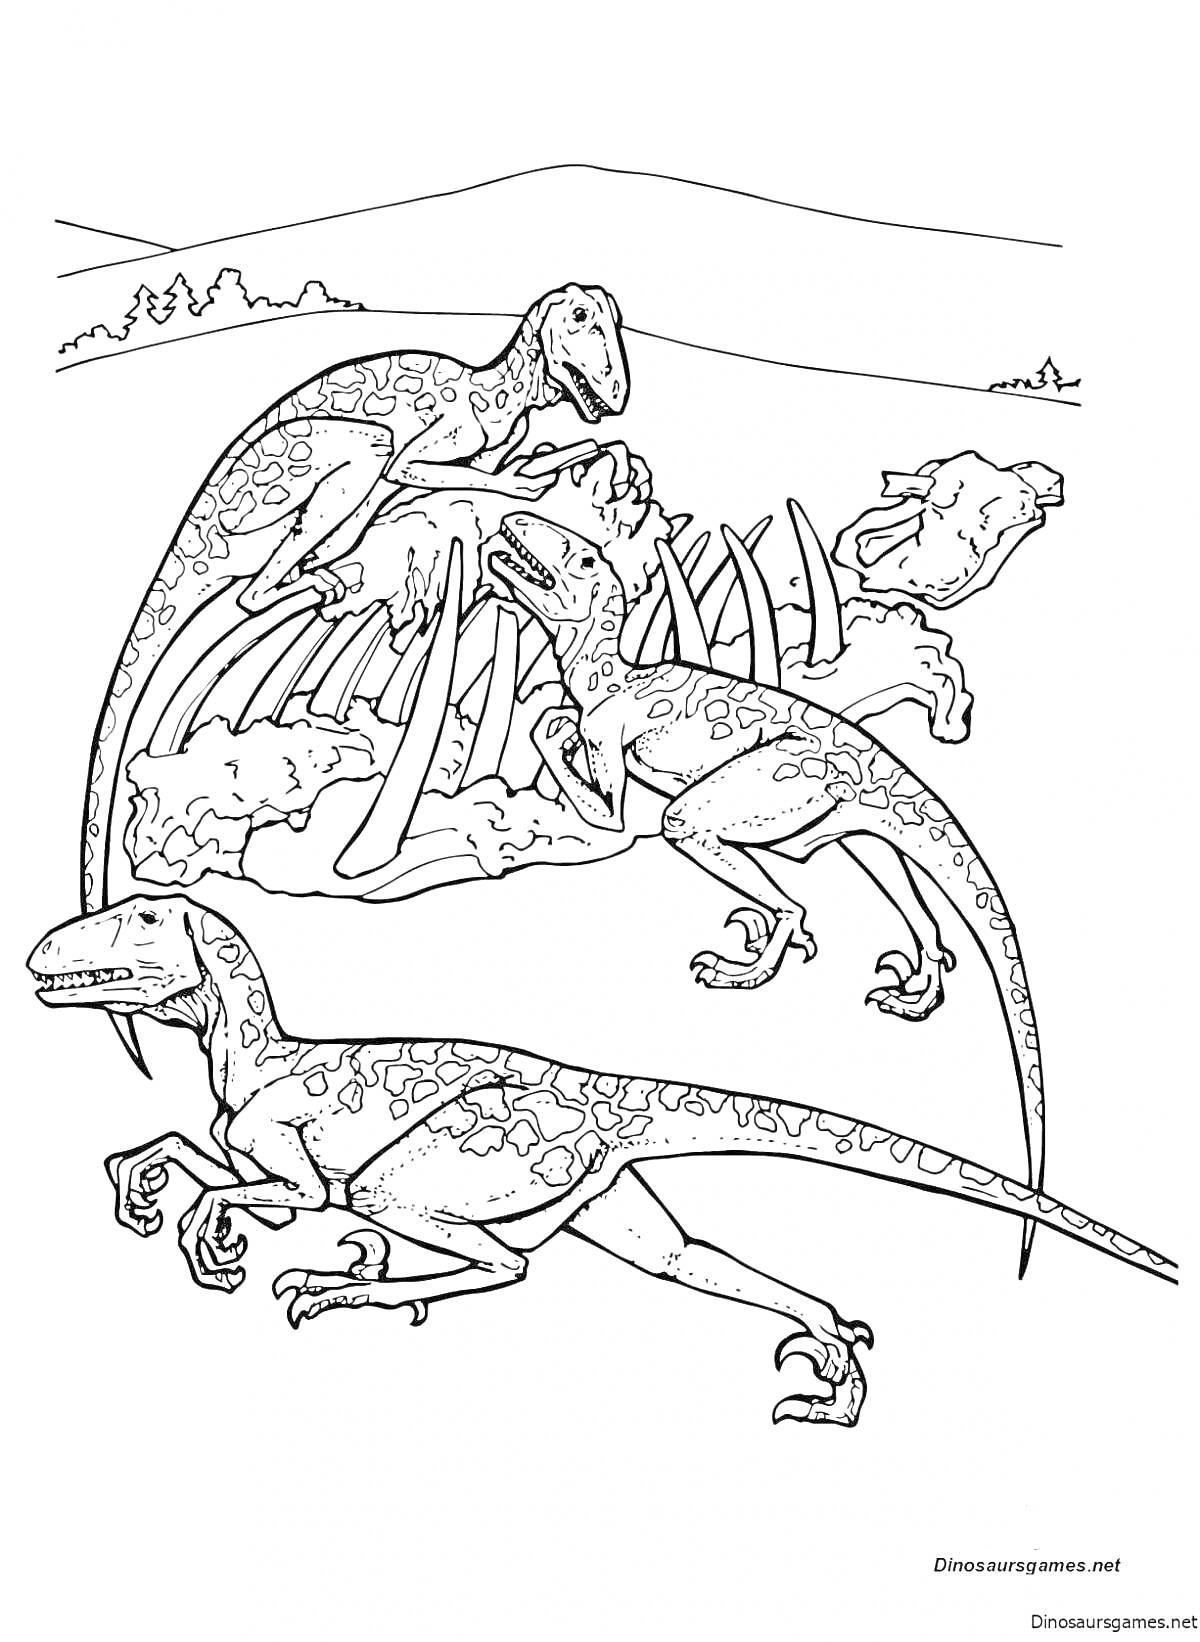 Раскраска Дейнонихи на фоне пейзажа и скелета динозавра